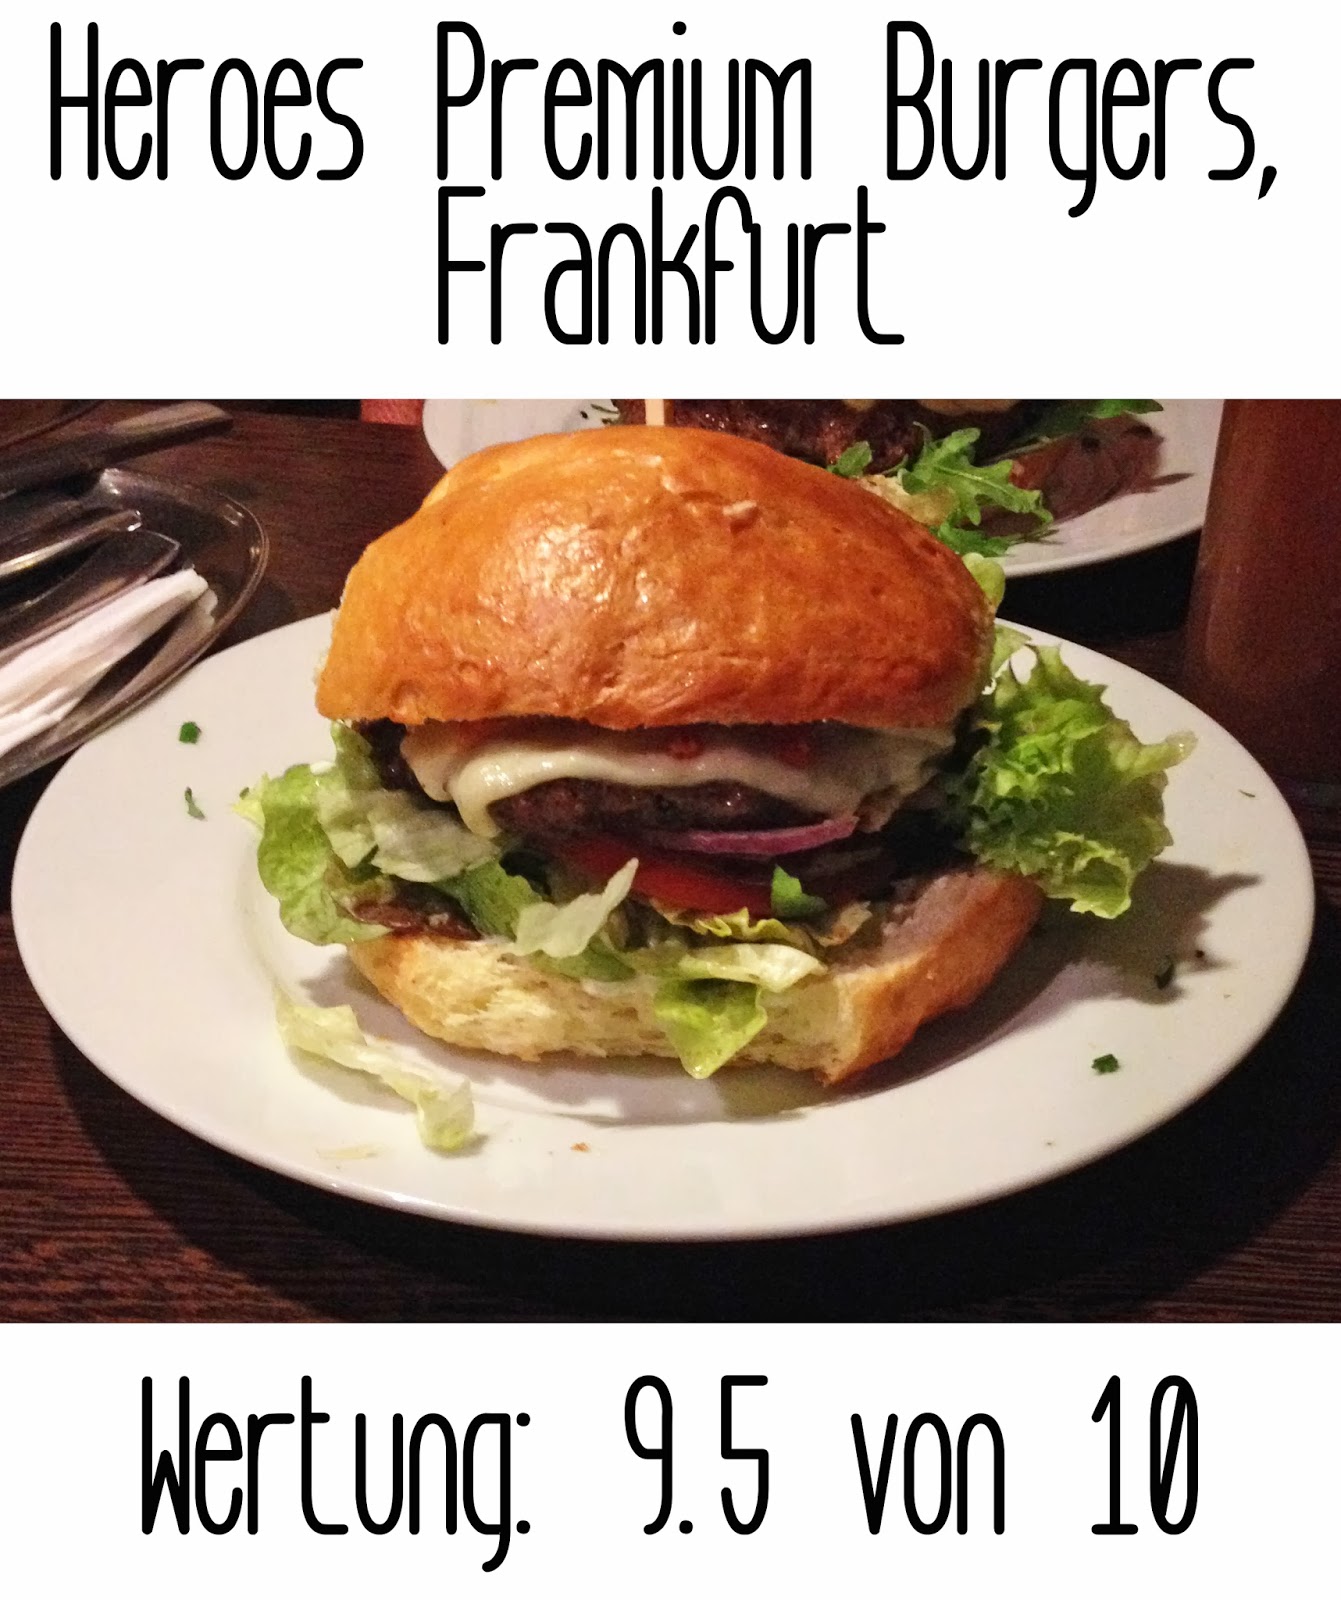 http://germanysbestburger.blogspot.de/2014/02/heroes-premium-burgers-frankfurt.html